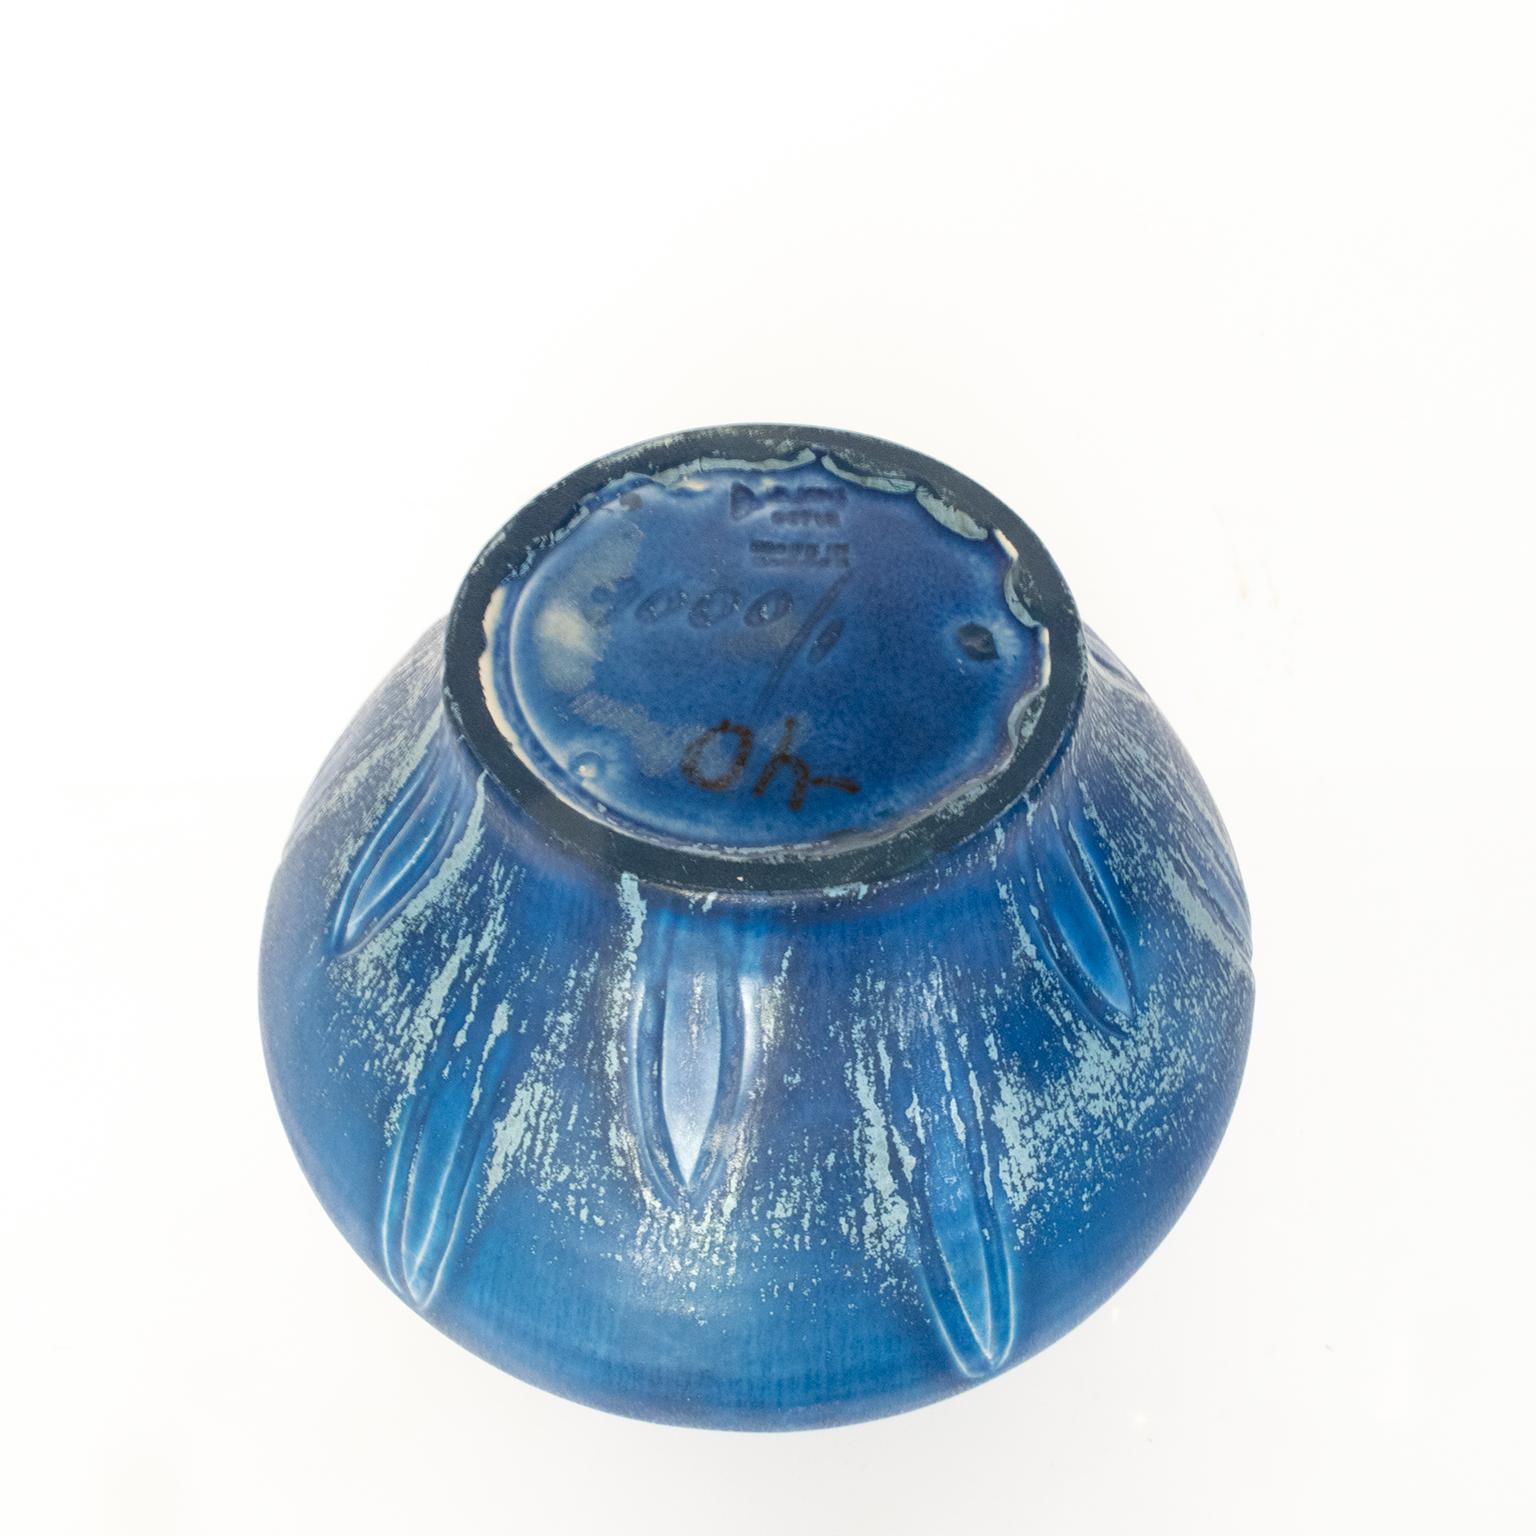 Glazed Eva Jancke-Björk Vase with Blue Glaze, from Bo Fajans, Sweden